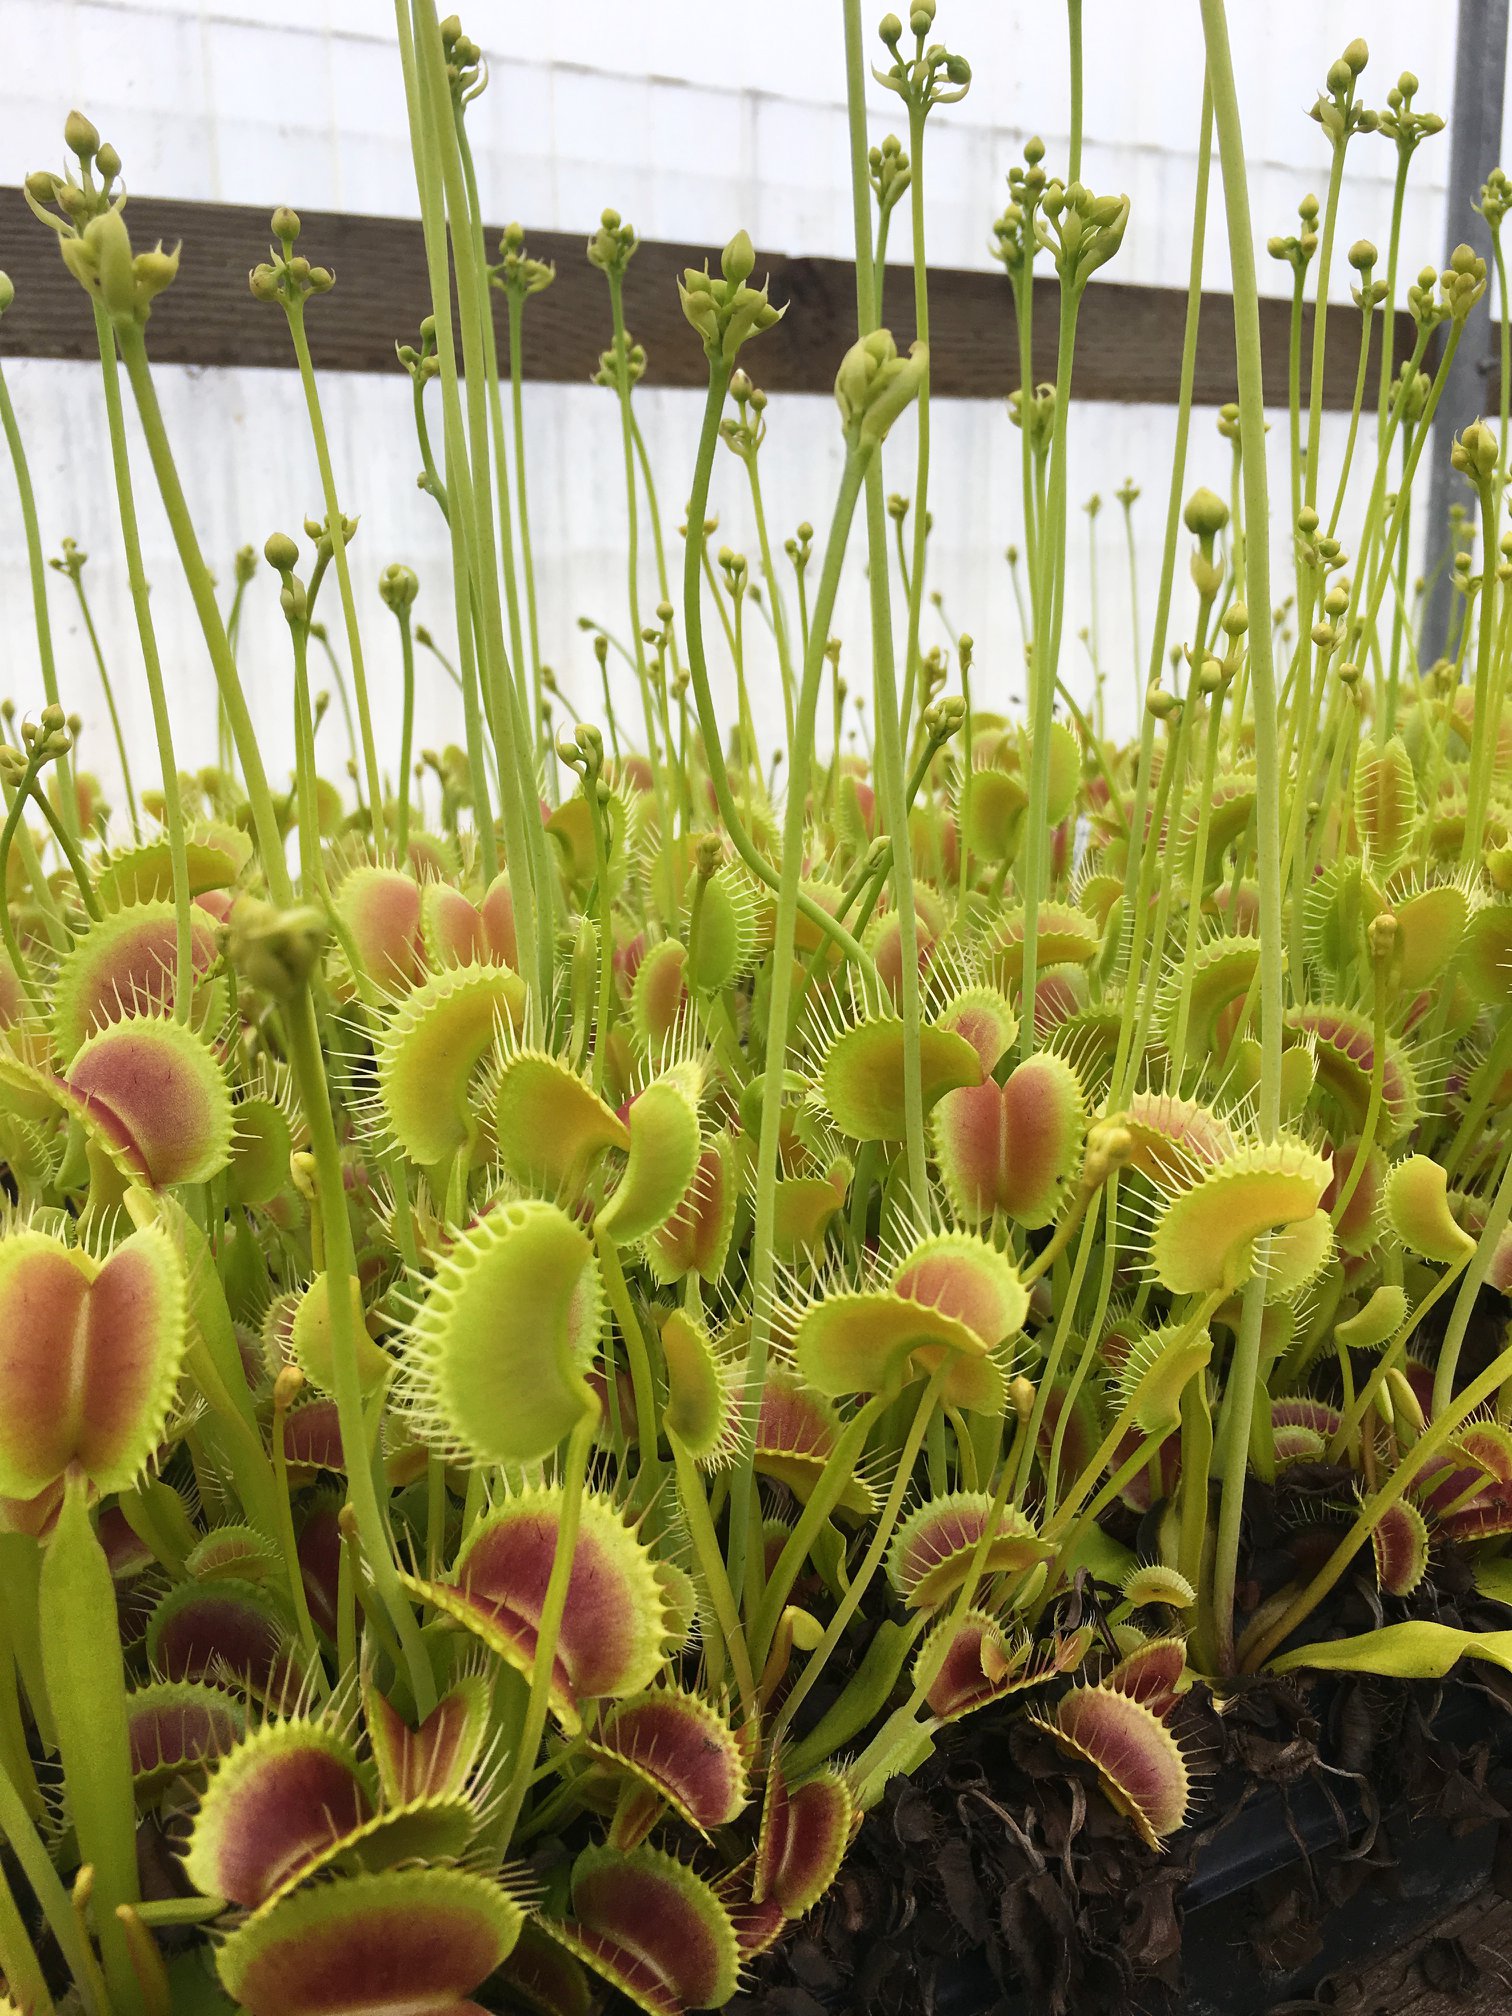 1x Adult Plant: Giant Venus Flytrap “King Henry” Dionaea Muscipula Cultivar